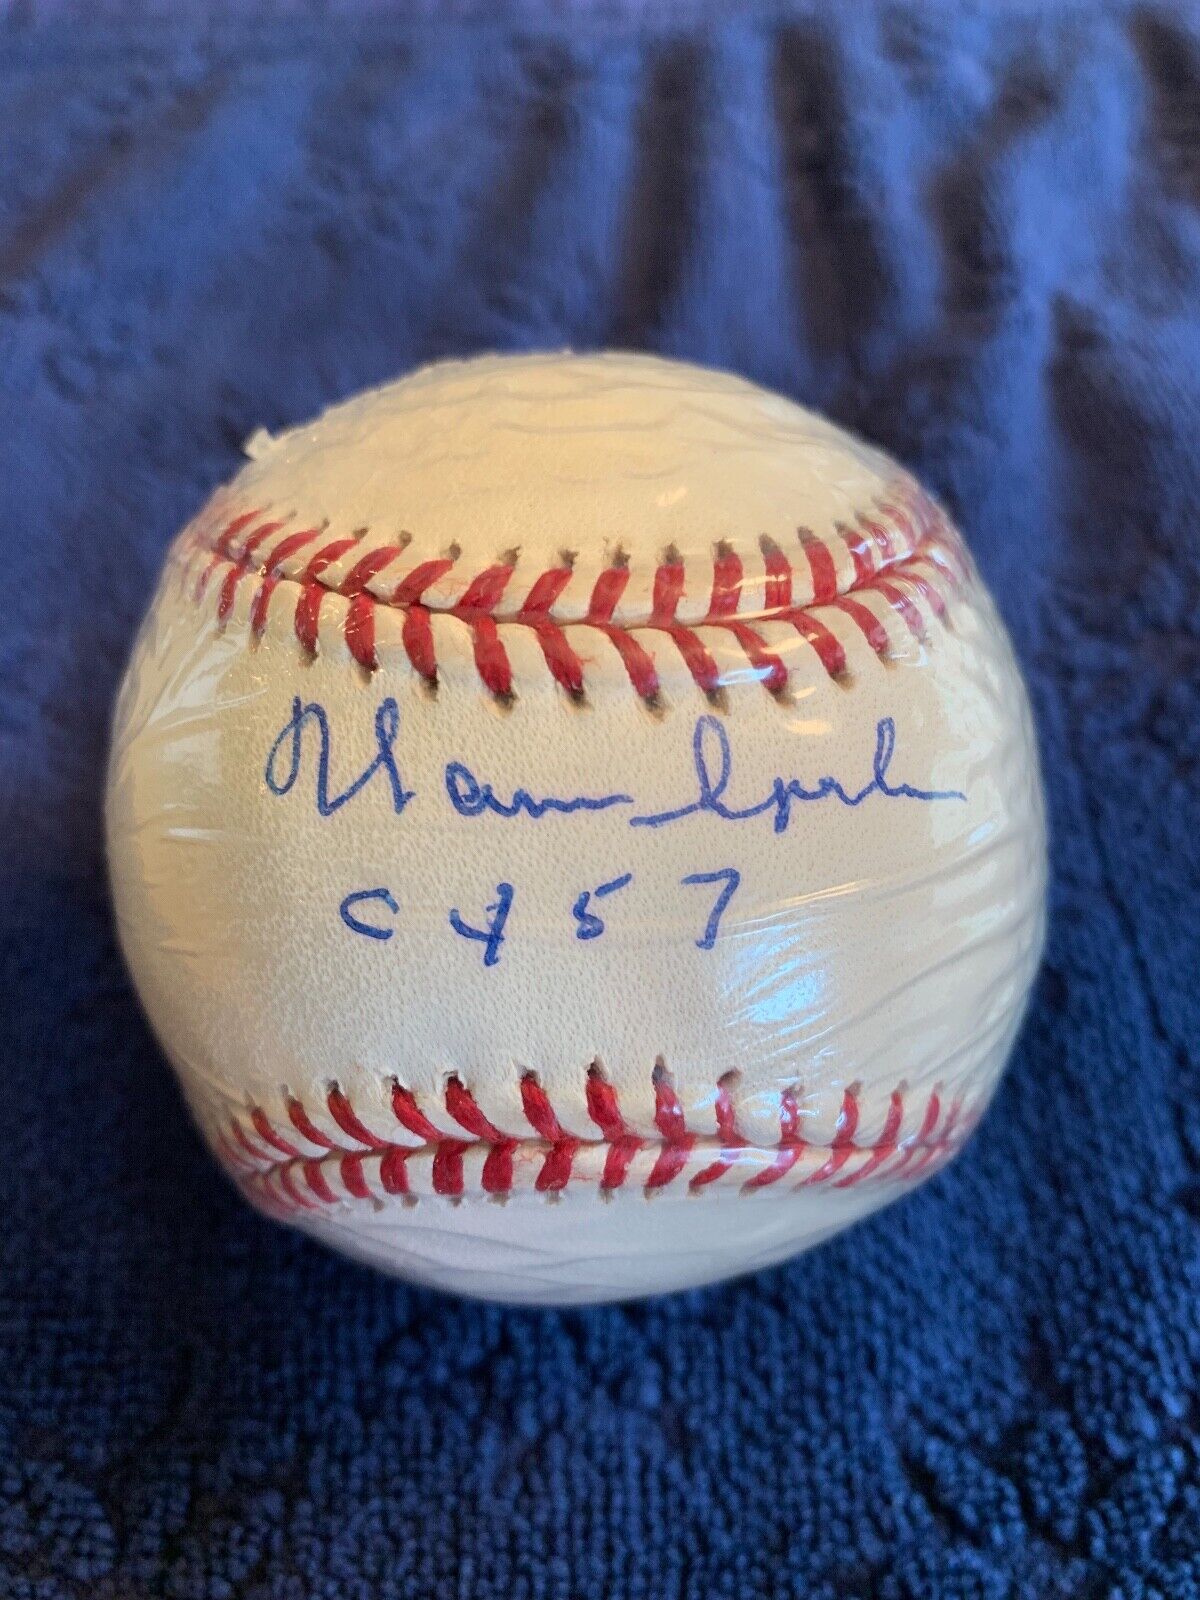 Warren Spahn CY 57 Autographed ONL Leonard S Coleman Baseball w/COA Vintage